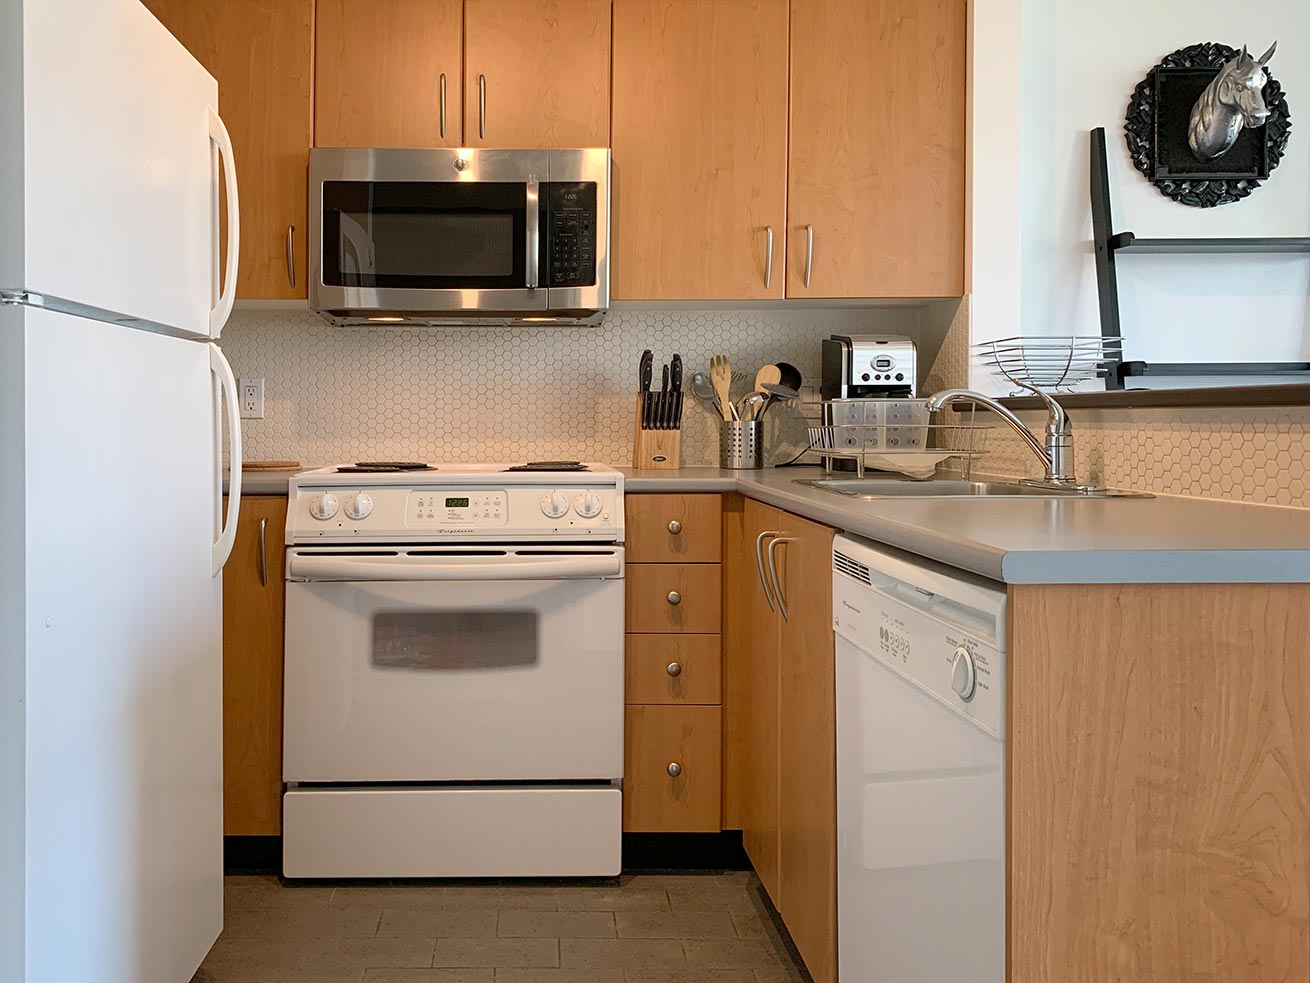 Vancouver apartments for rent oscar studio kitchen